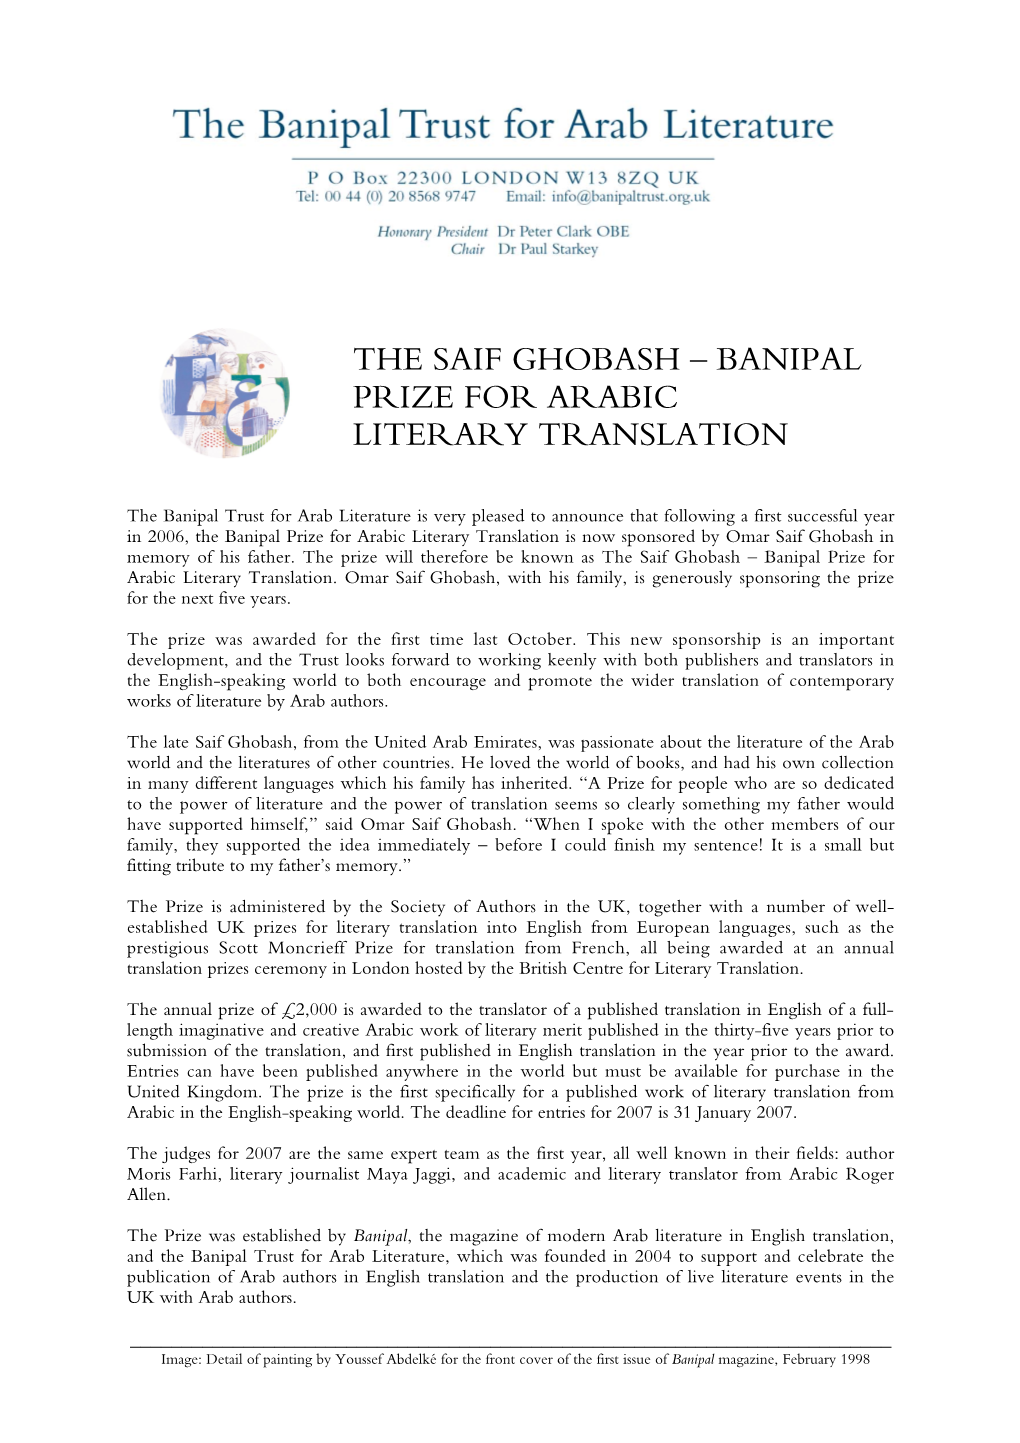 The Saif Ghobash – Banipal Prize for Arabic Literary Translation